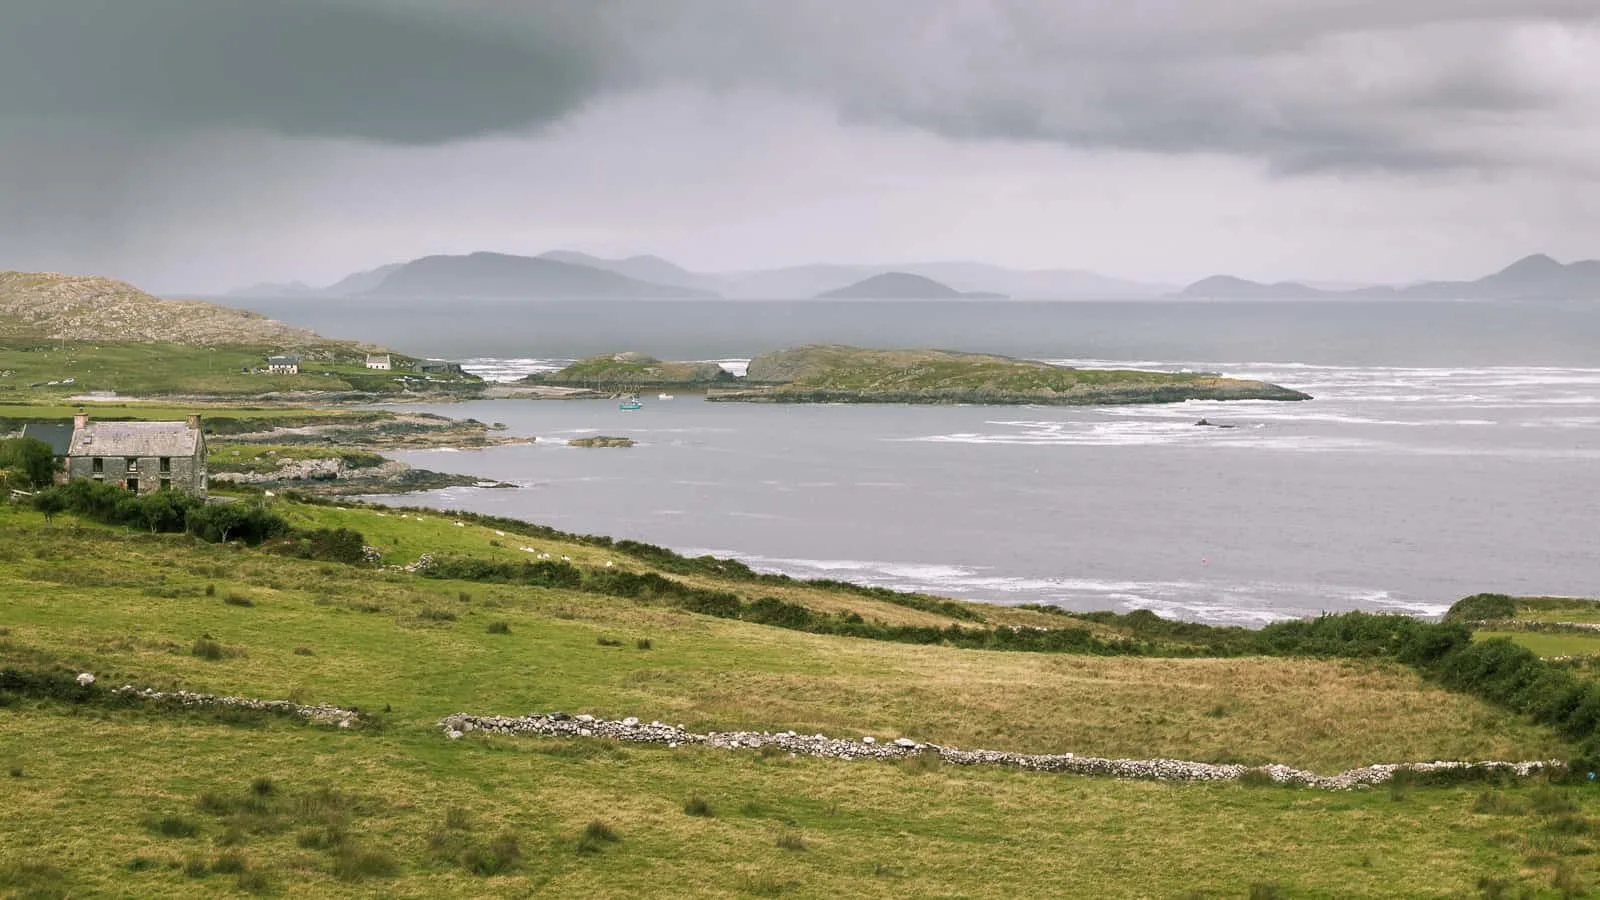 Beara Peninsula - A brief guide to the Ring of Beara on Ireland's Wild Atlantic Way.